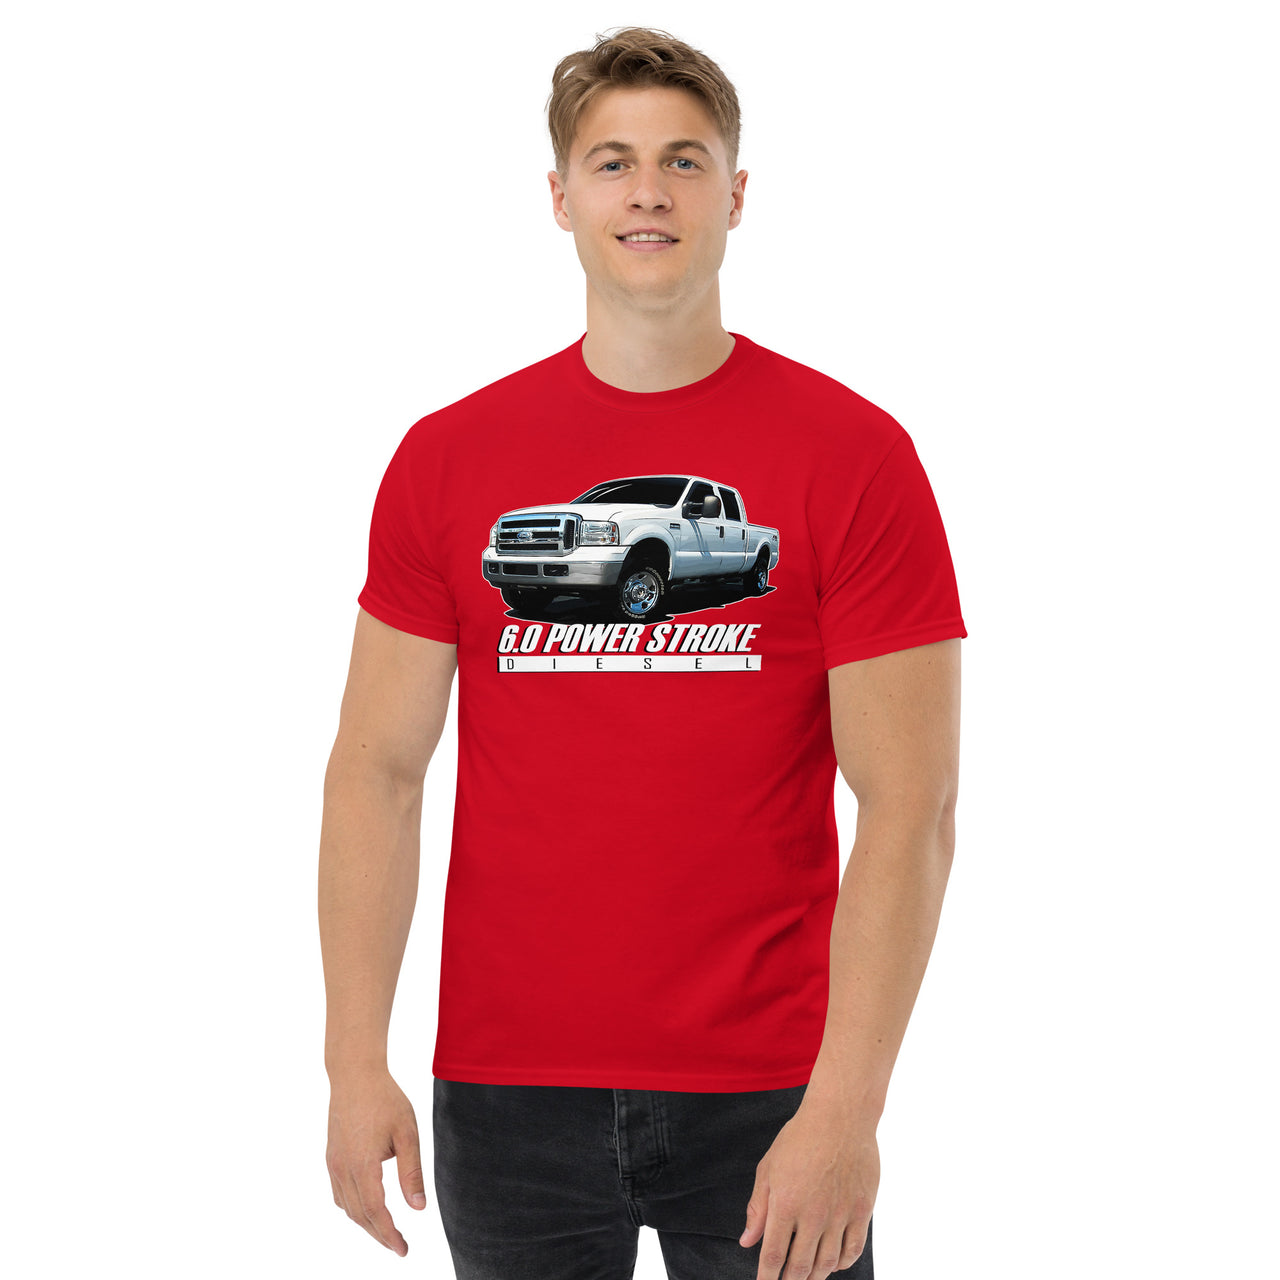 6.0 Power Stroke Diesel T-Shirt modeled in red